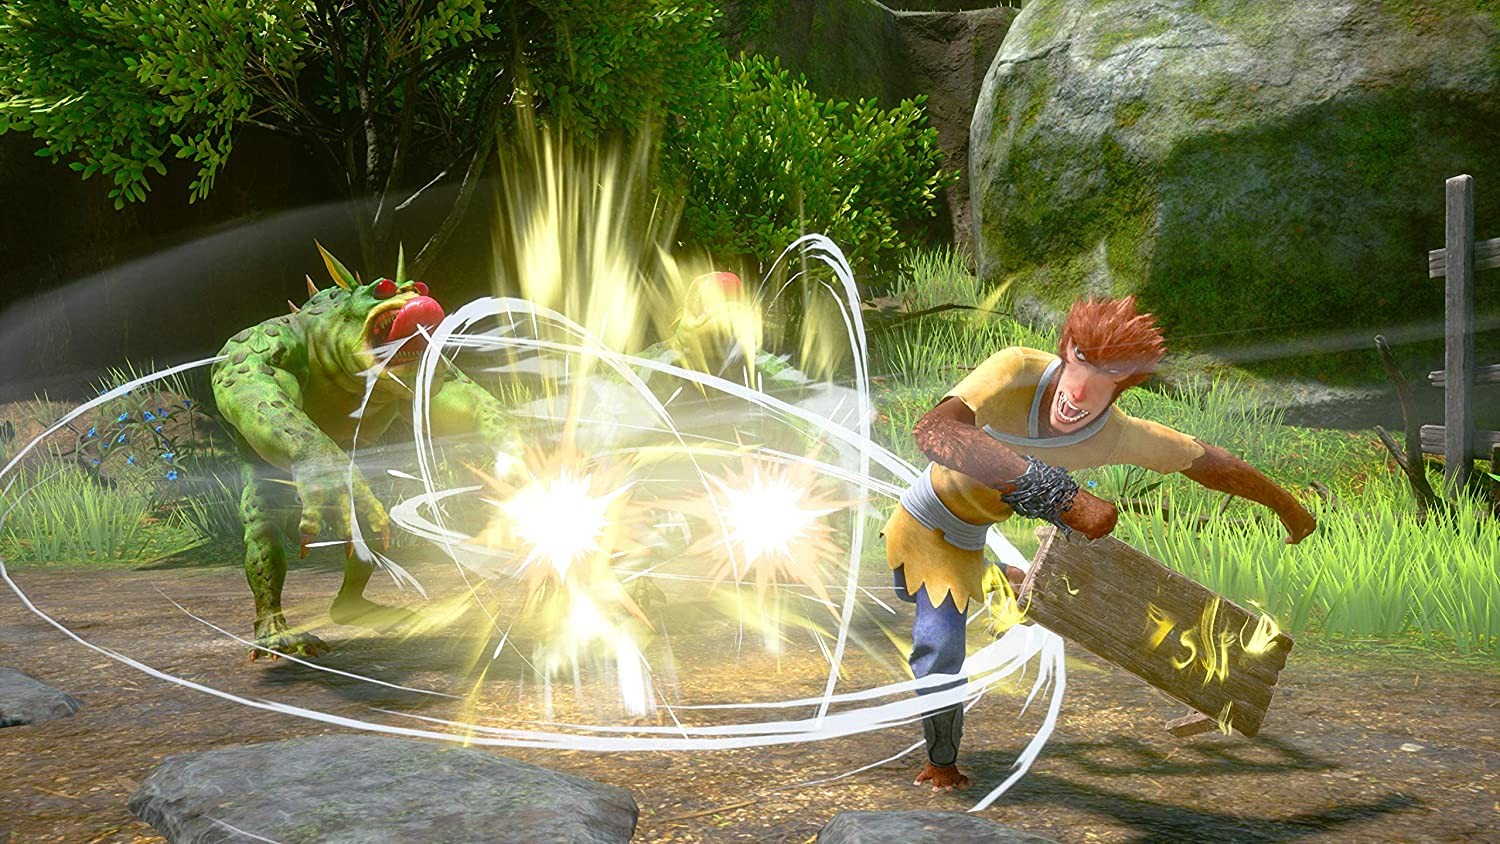 Monkey King: Hero is Back PS4